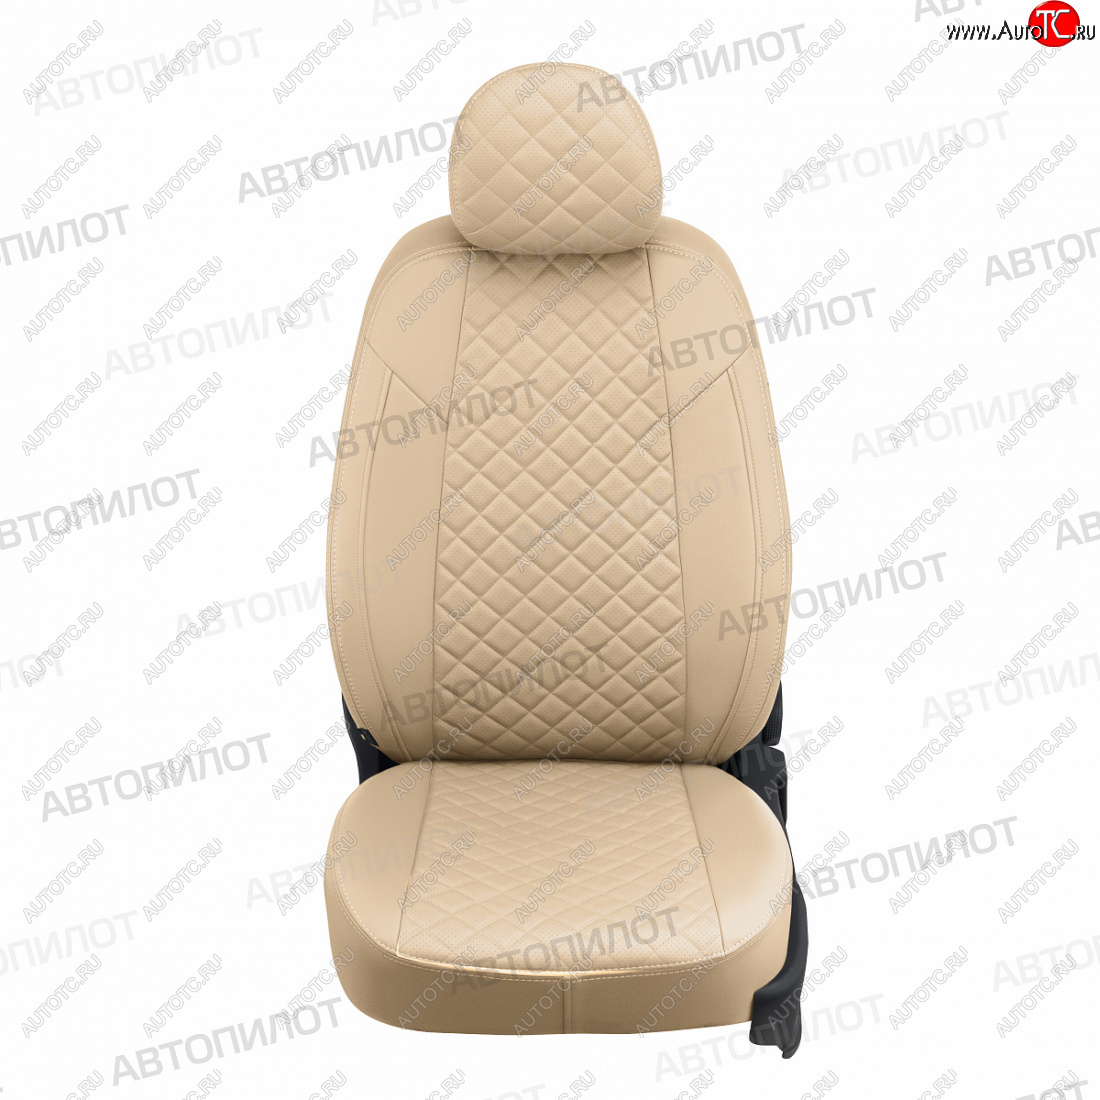 8 699 р. Чехлы сидений (экокожа, 3 места) Автопилот Ромб  Hyundai HD-72 - HD78 (бежевый)